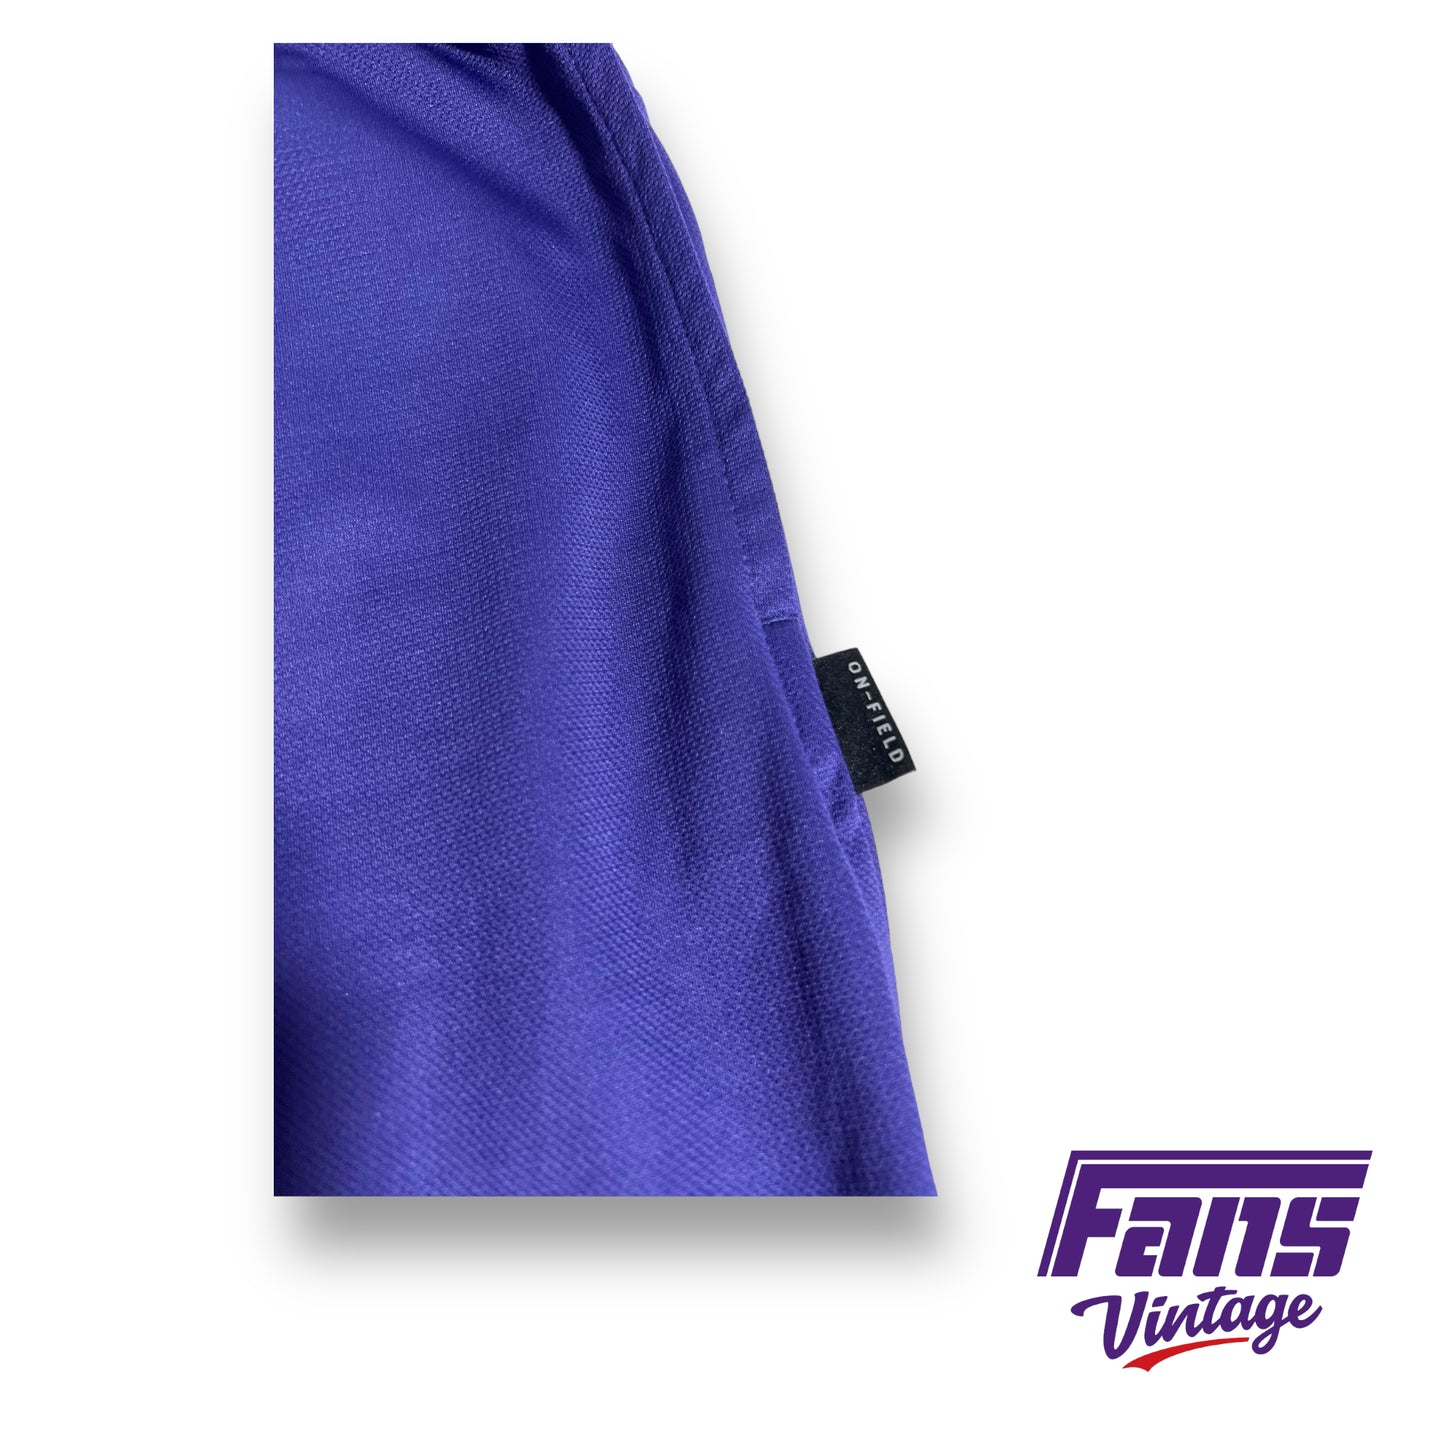 Nike TCU team issued purple shorts